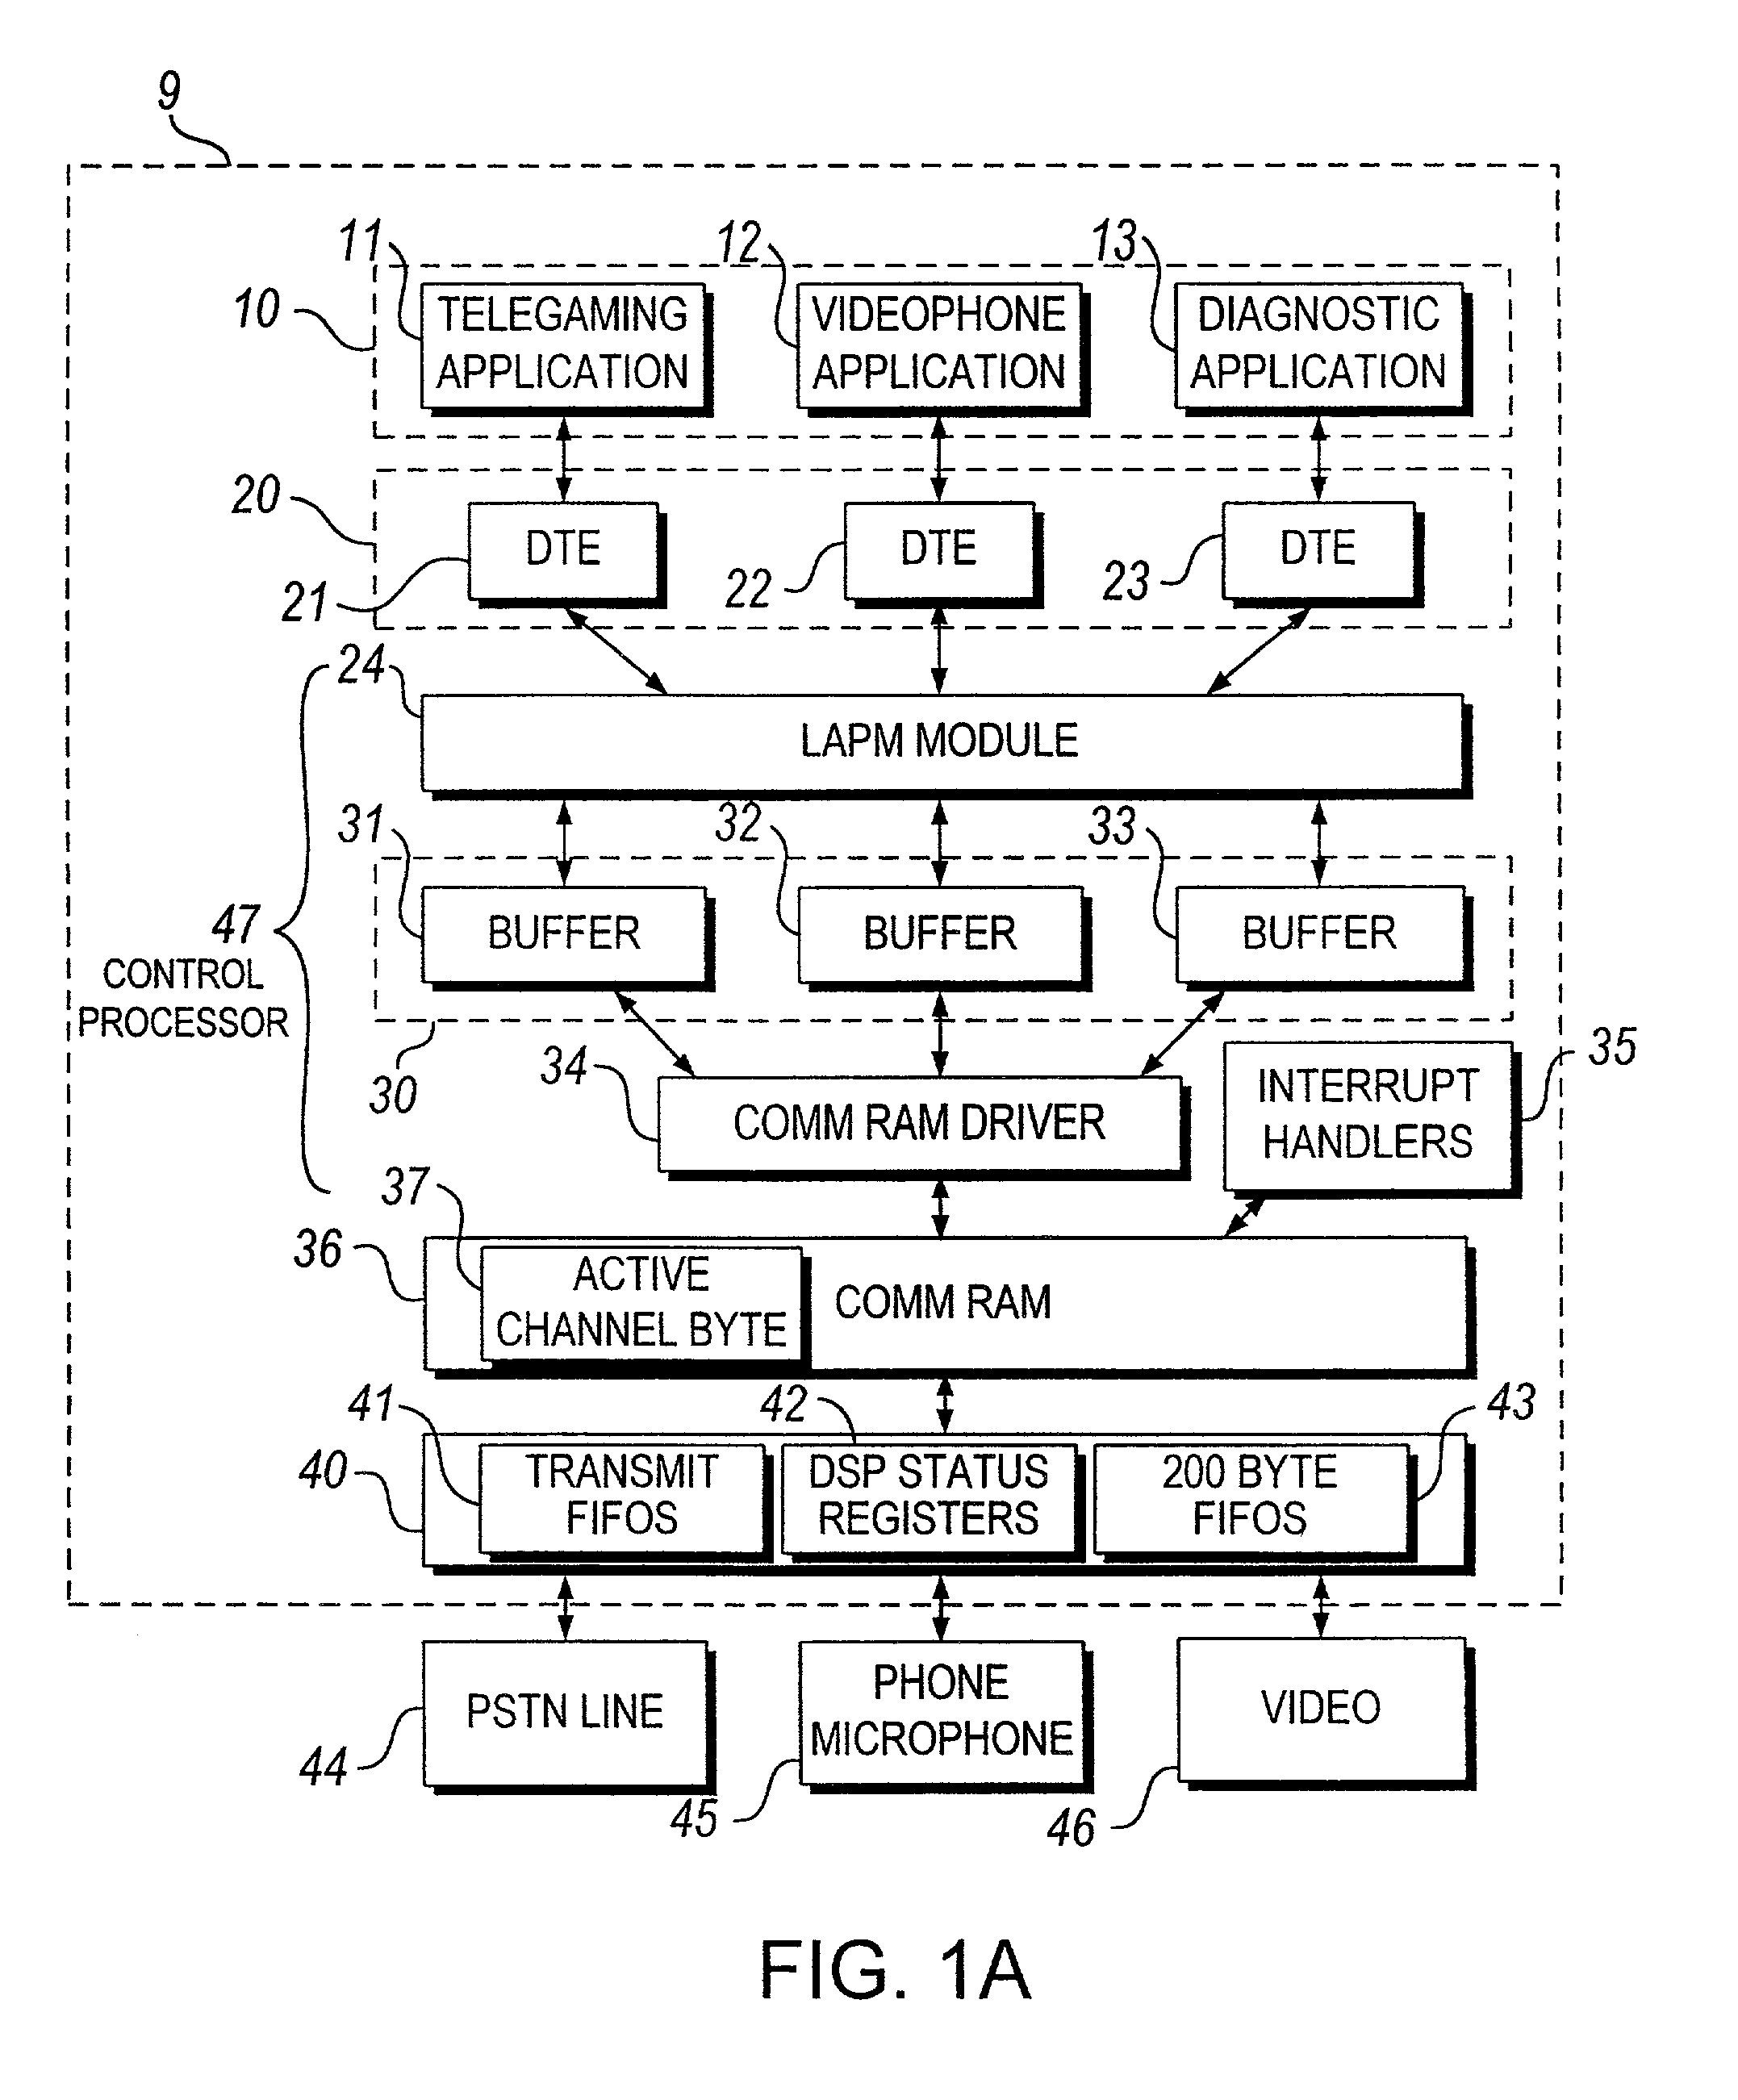 Interface control of communication between a control processor and a digital signal processor